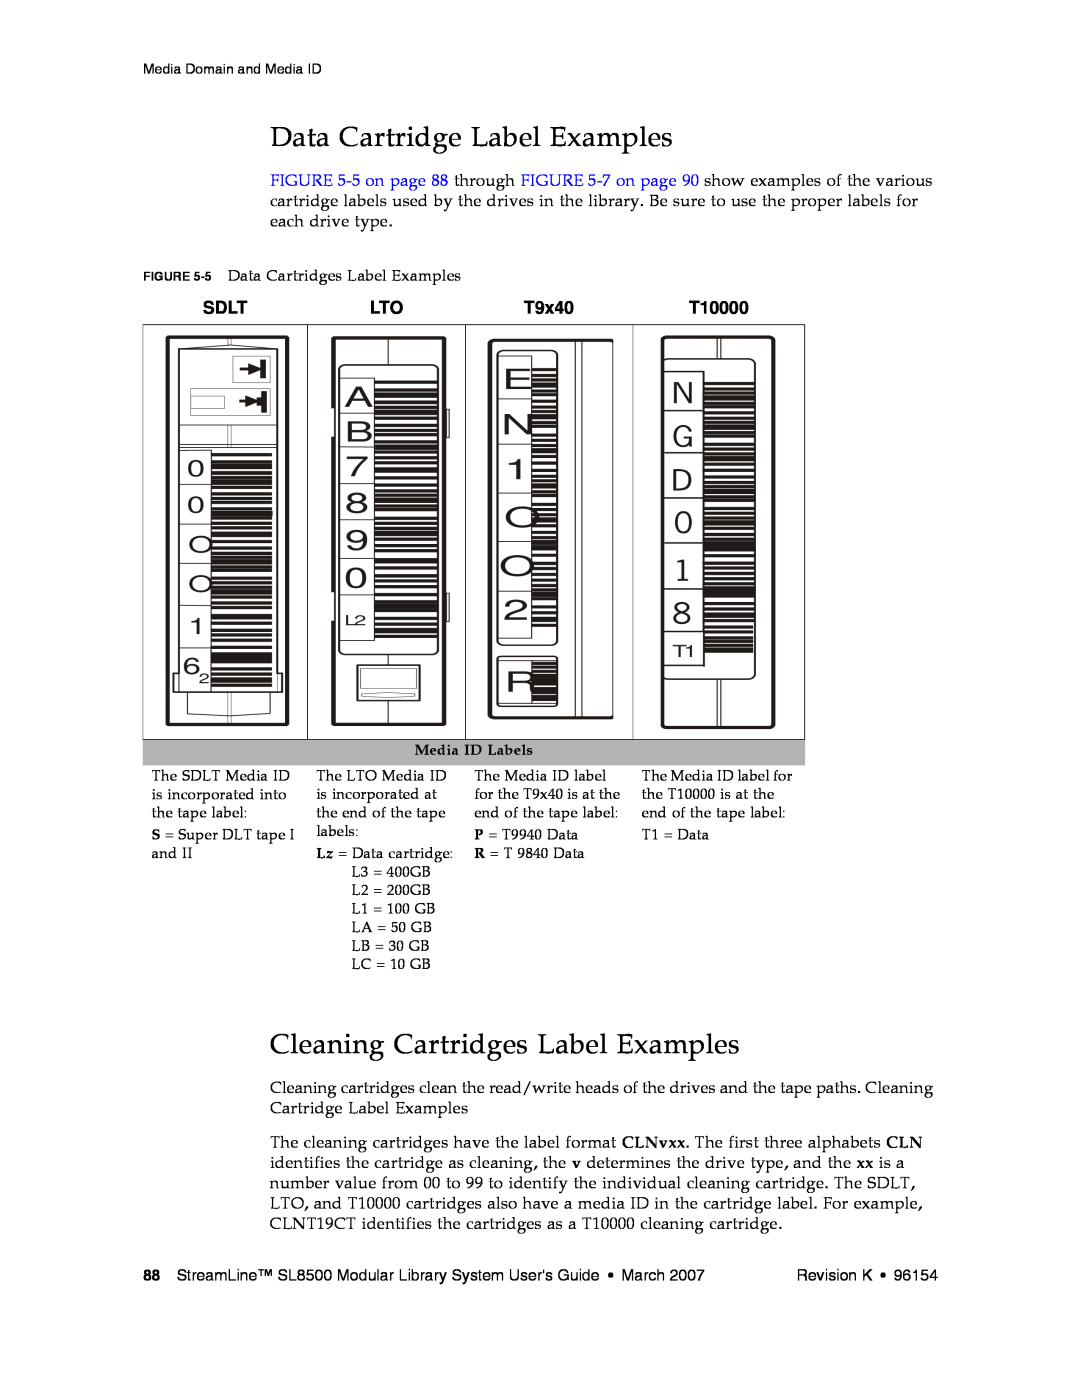 Sun Microsystems SL8500 manual Data Cartridge Label Examples, Cleaning Cartridges Label Examples, Sdlt, T9x40, T10000, O O 